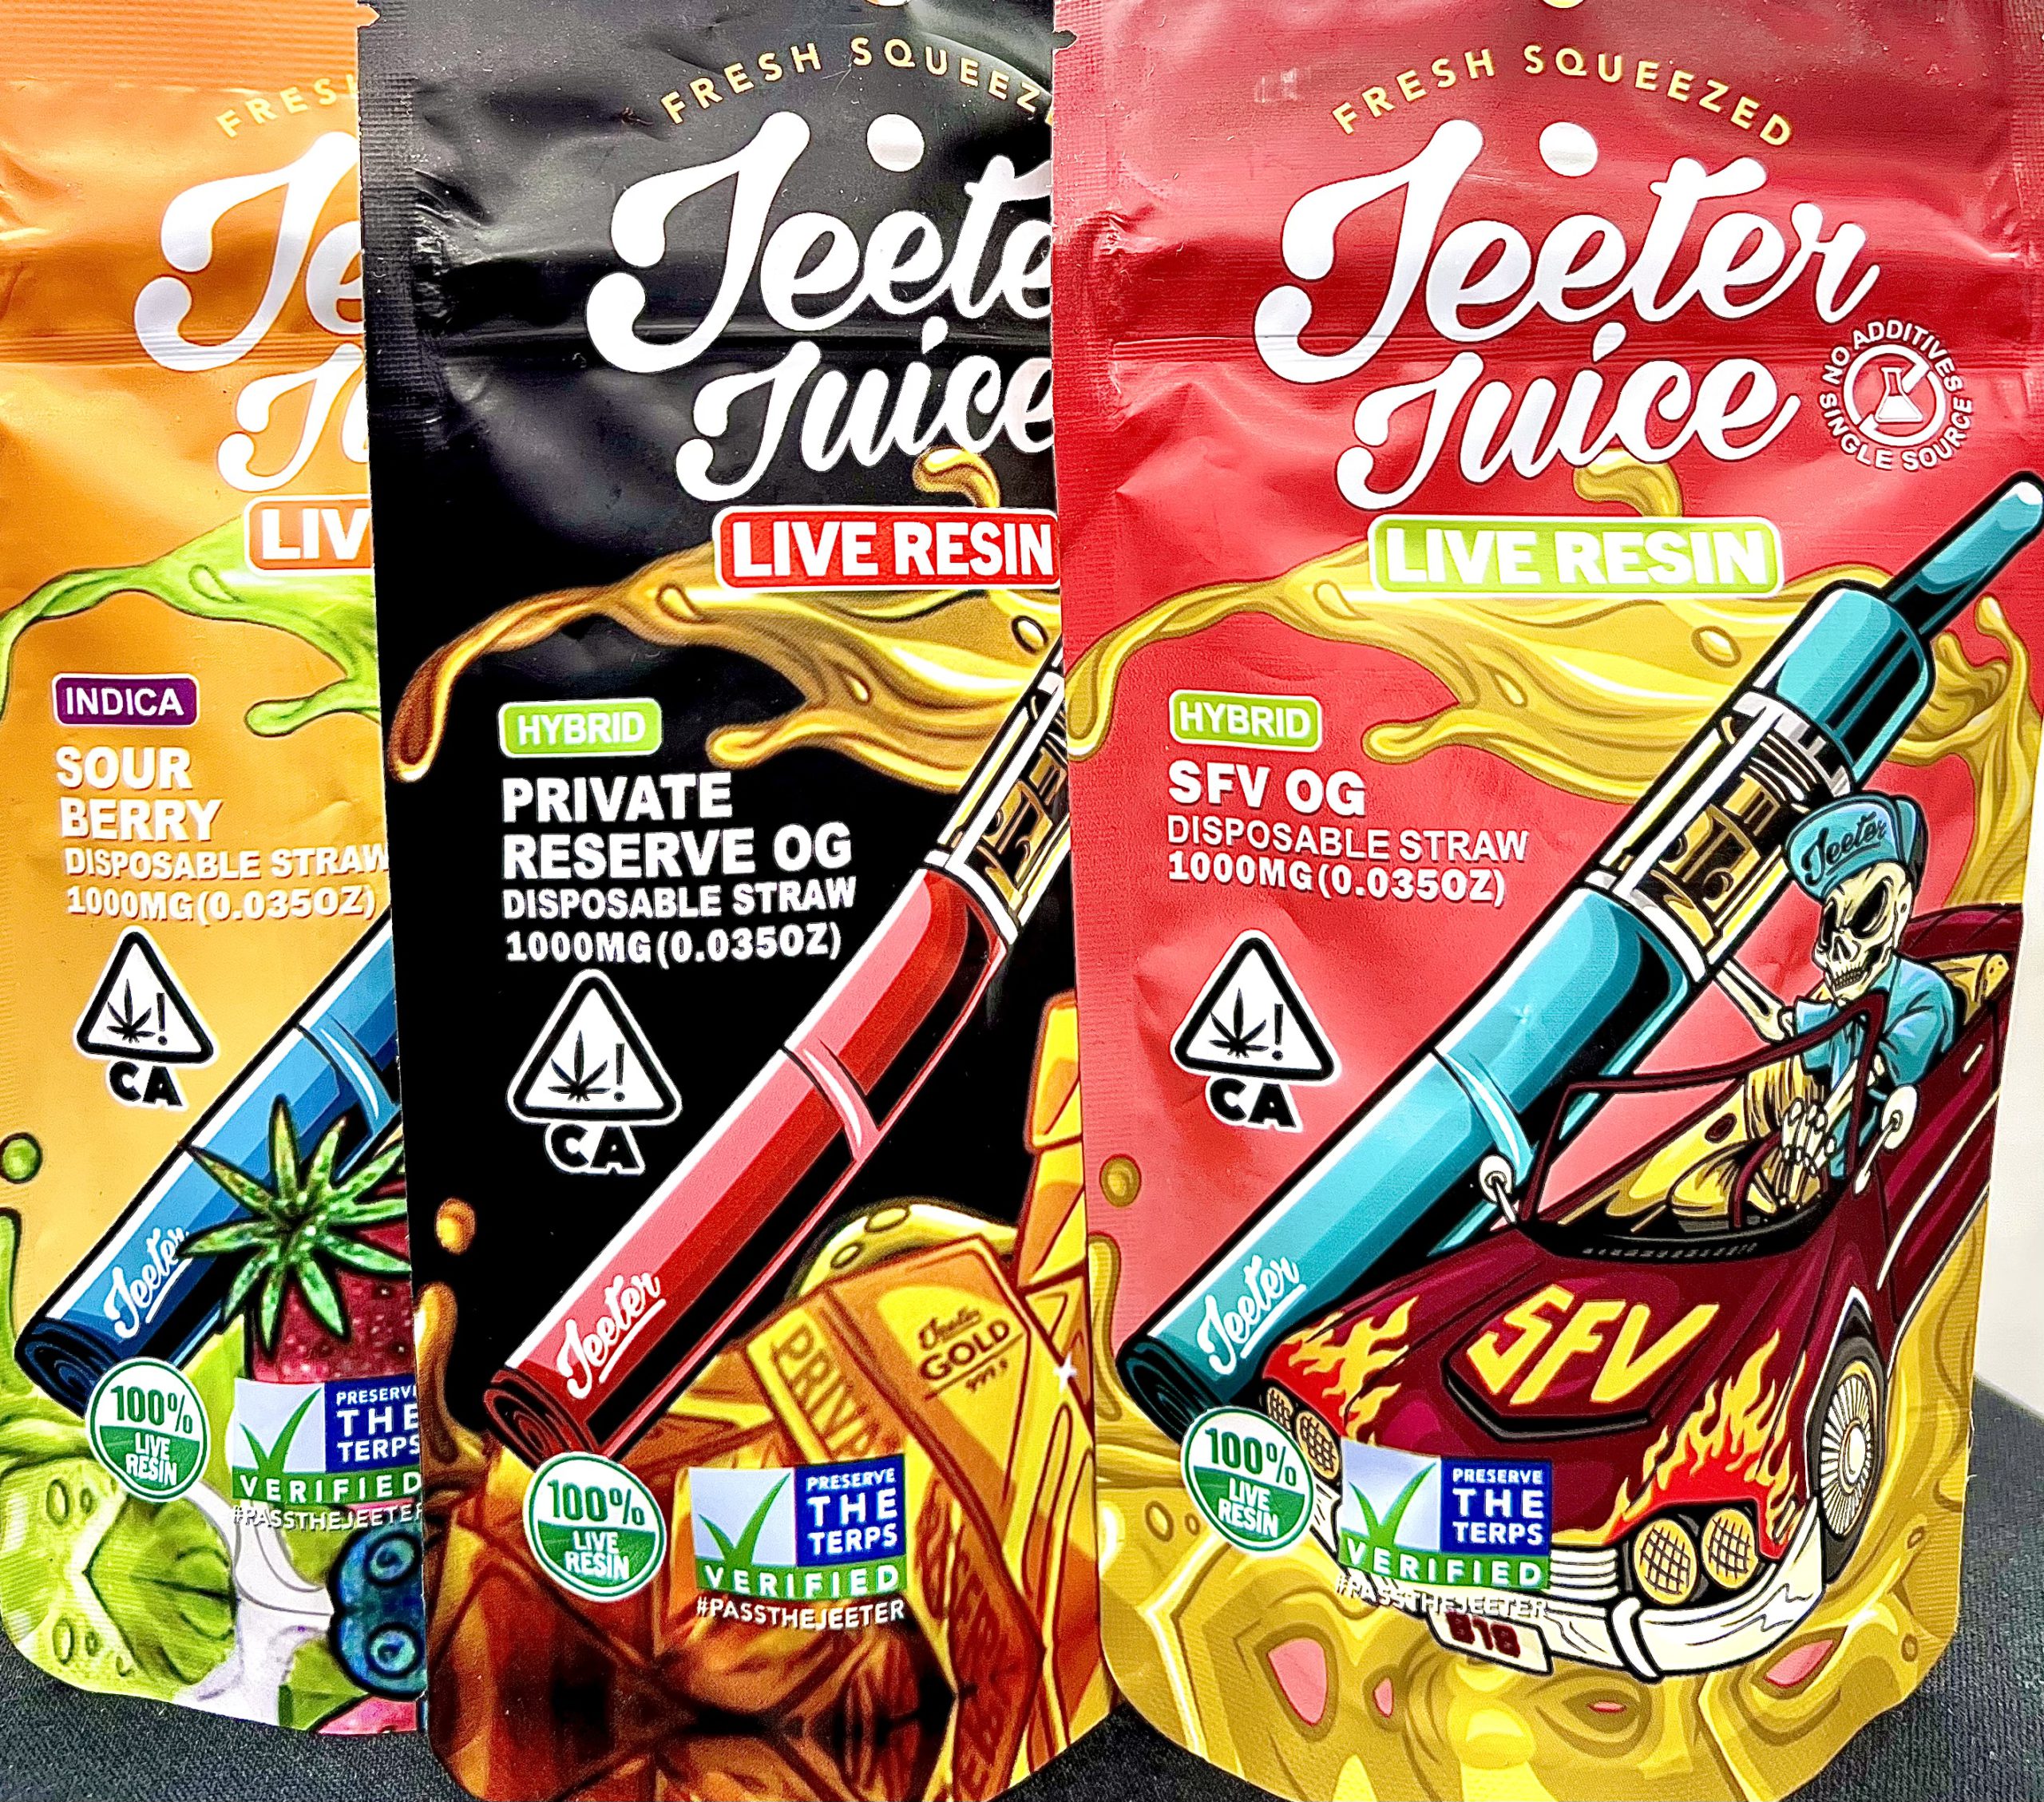 Jeeter Juice Live Resin vape pen